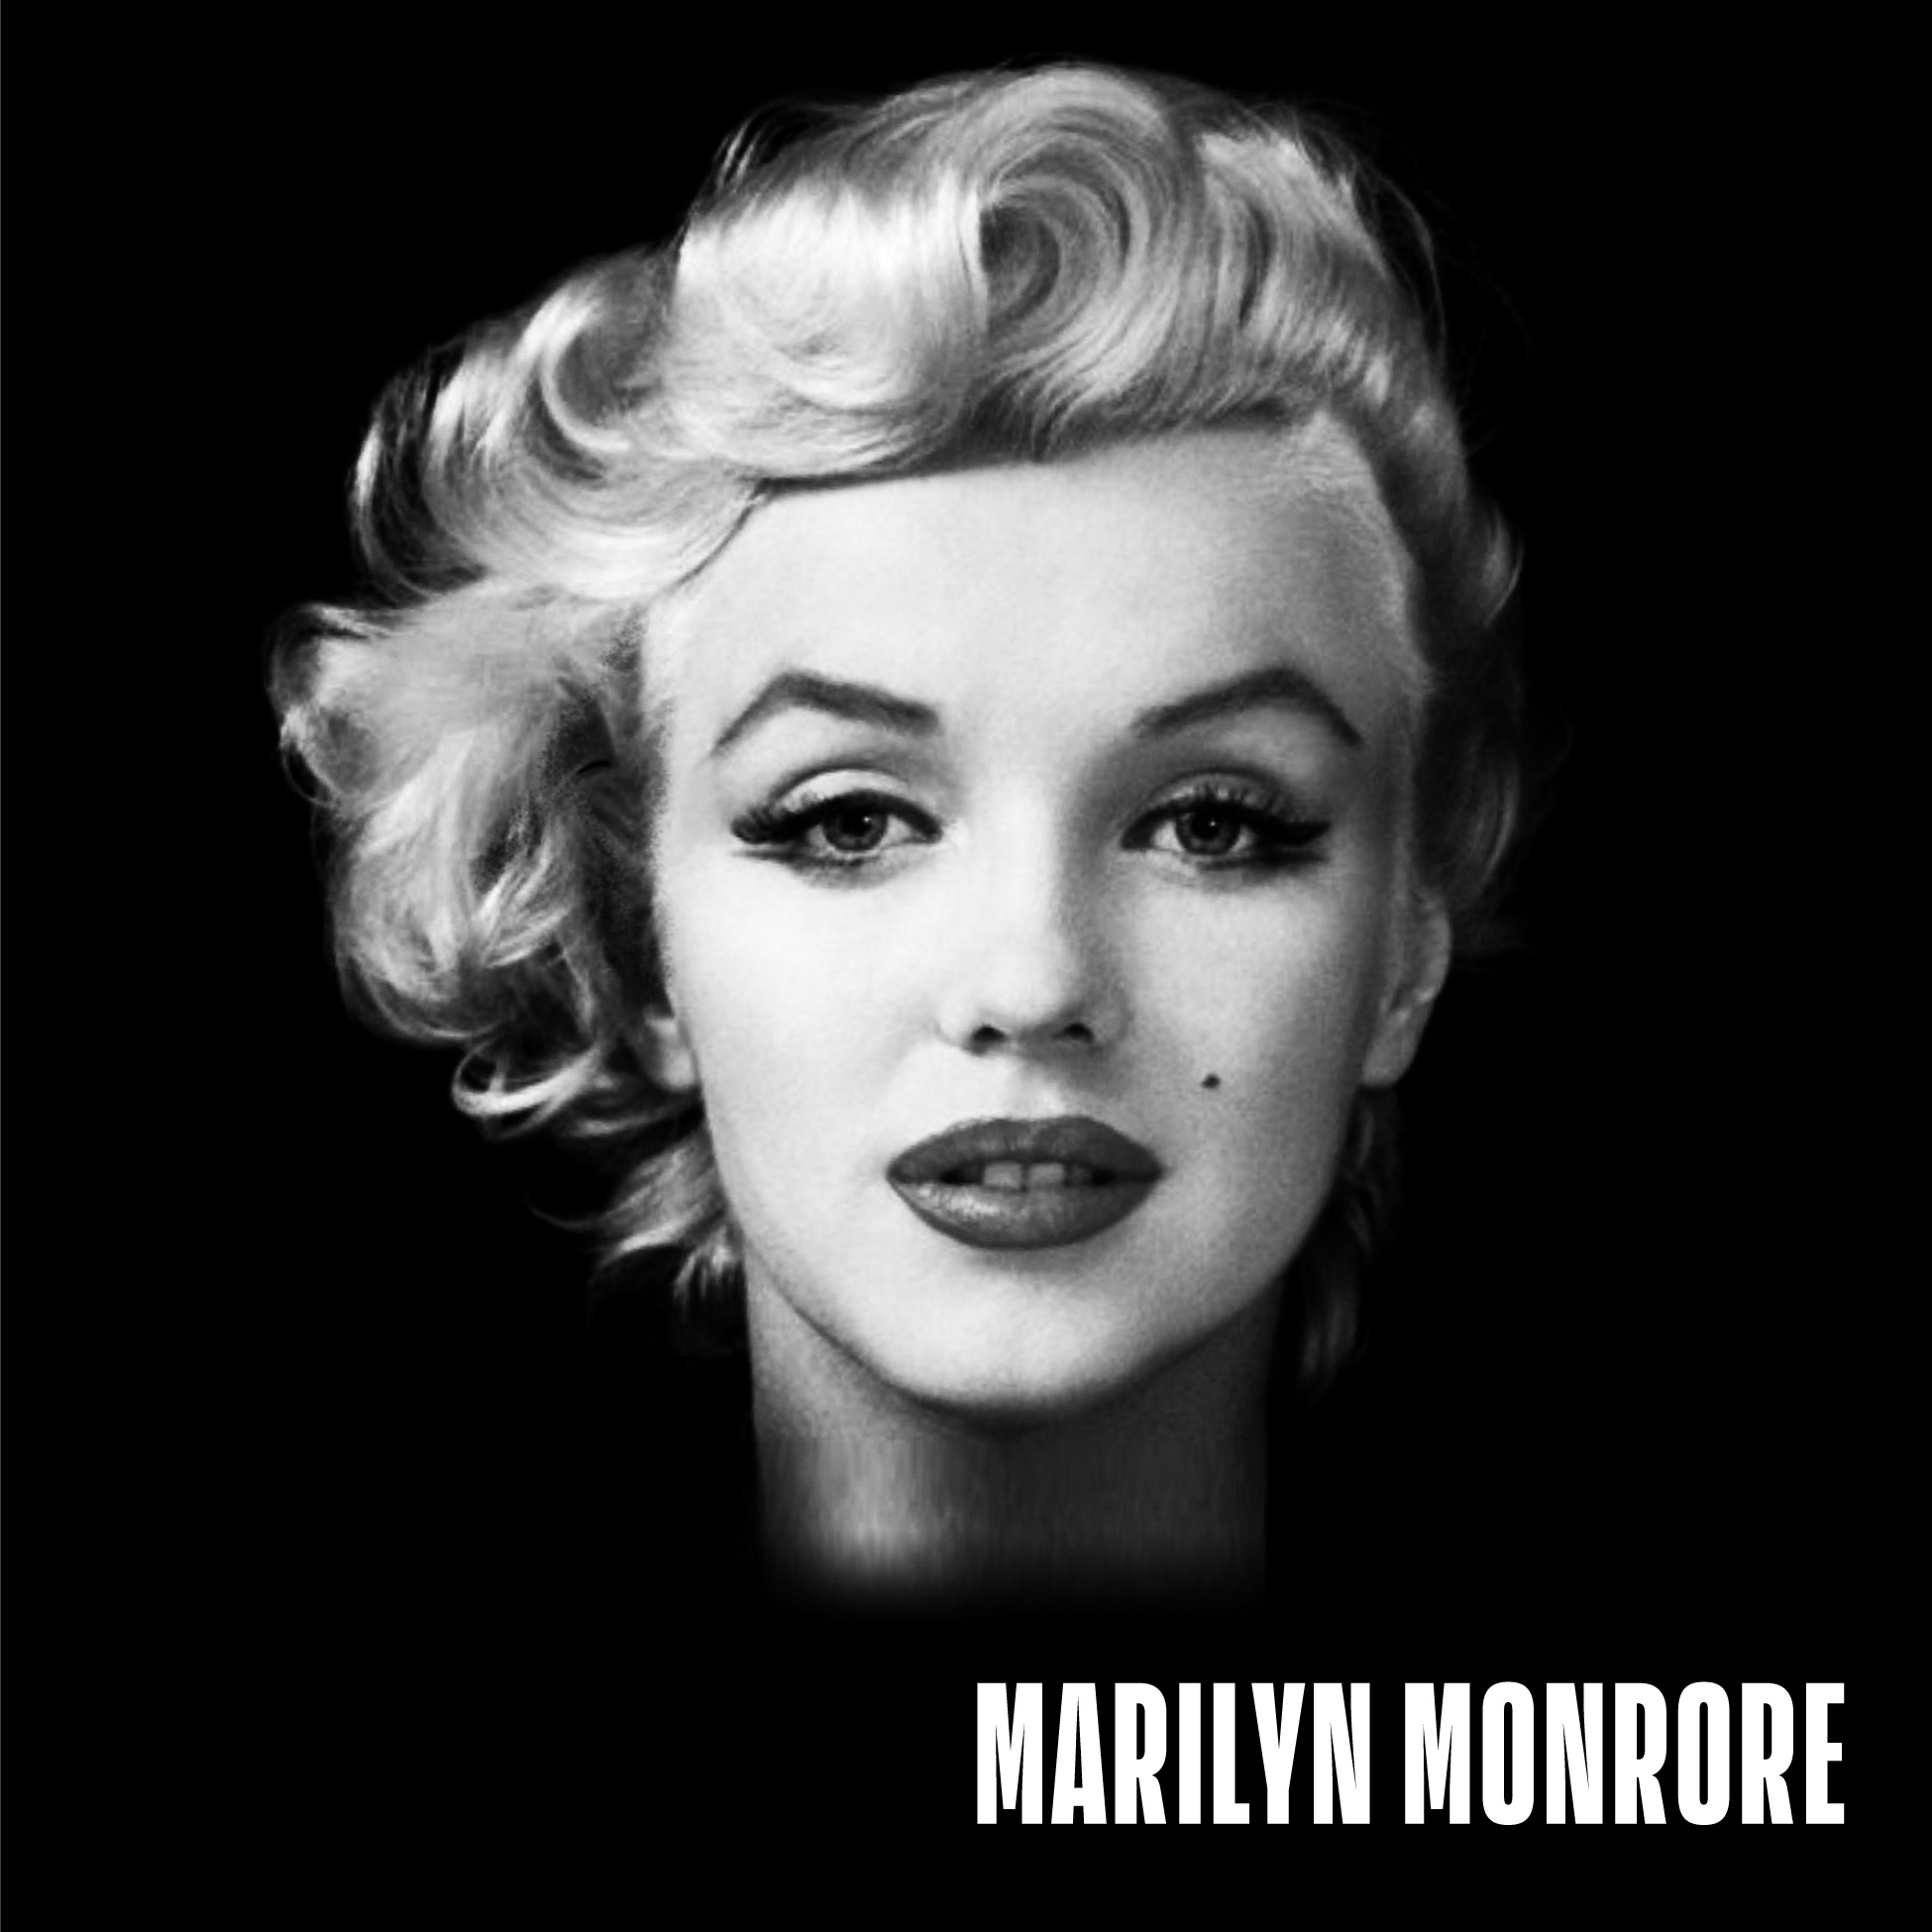 Marilyn Manson Monroe Hybrid Images